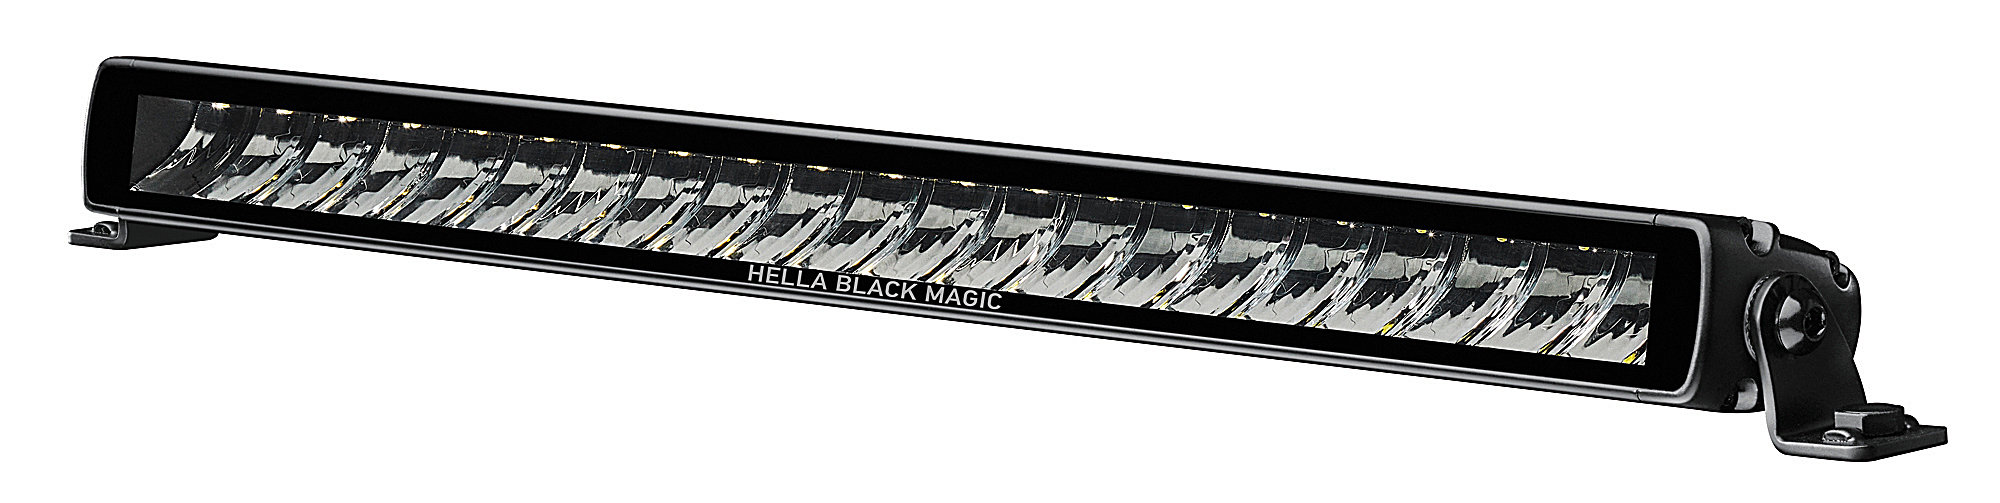 Hella Black Magic LED Light Bar | Quadratec